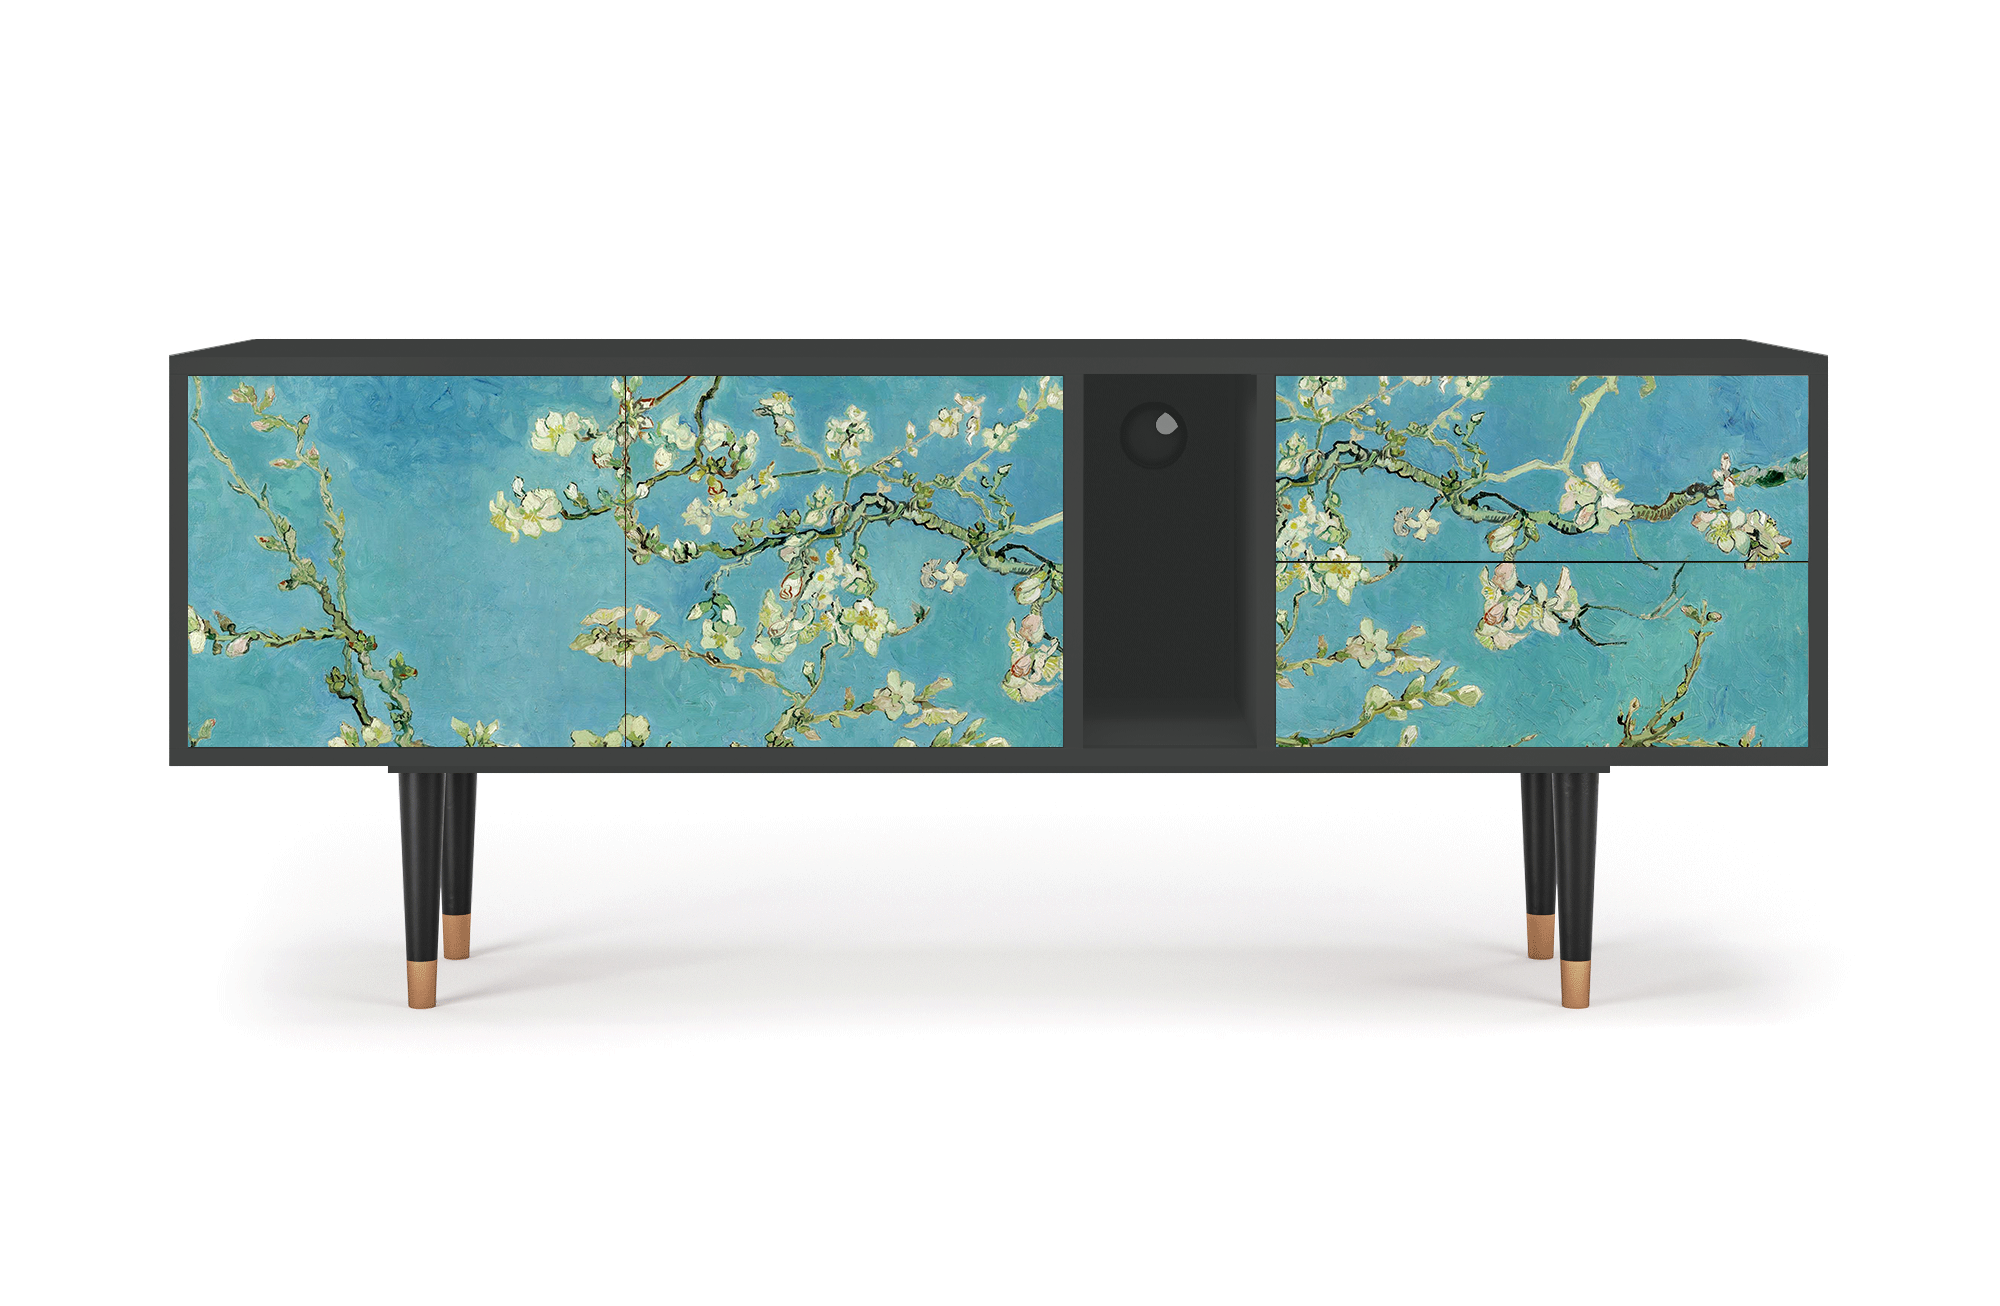 ТВ-Тумба - STORYZ - T1 Almond Blossom by Van Gogh, 170 x 69 x 48 см, Антрацит - фотография № 2